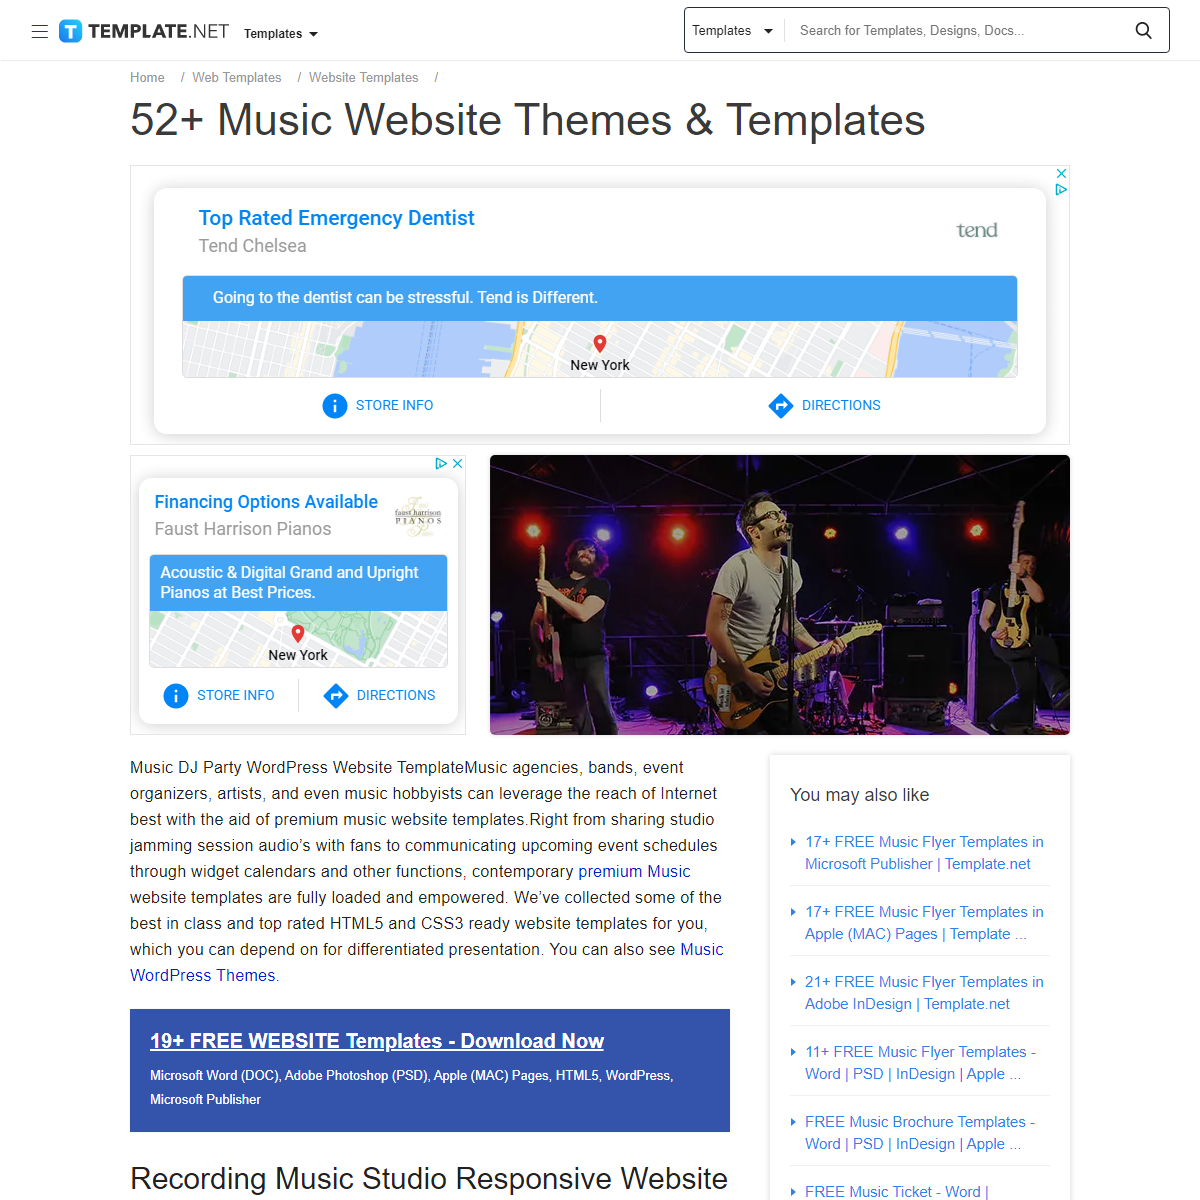 A complete backup of https://www.template.net/web-templates/website-templates/45-best-premium-music-website-templates/